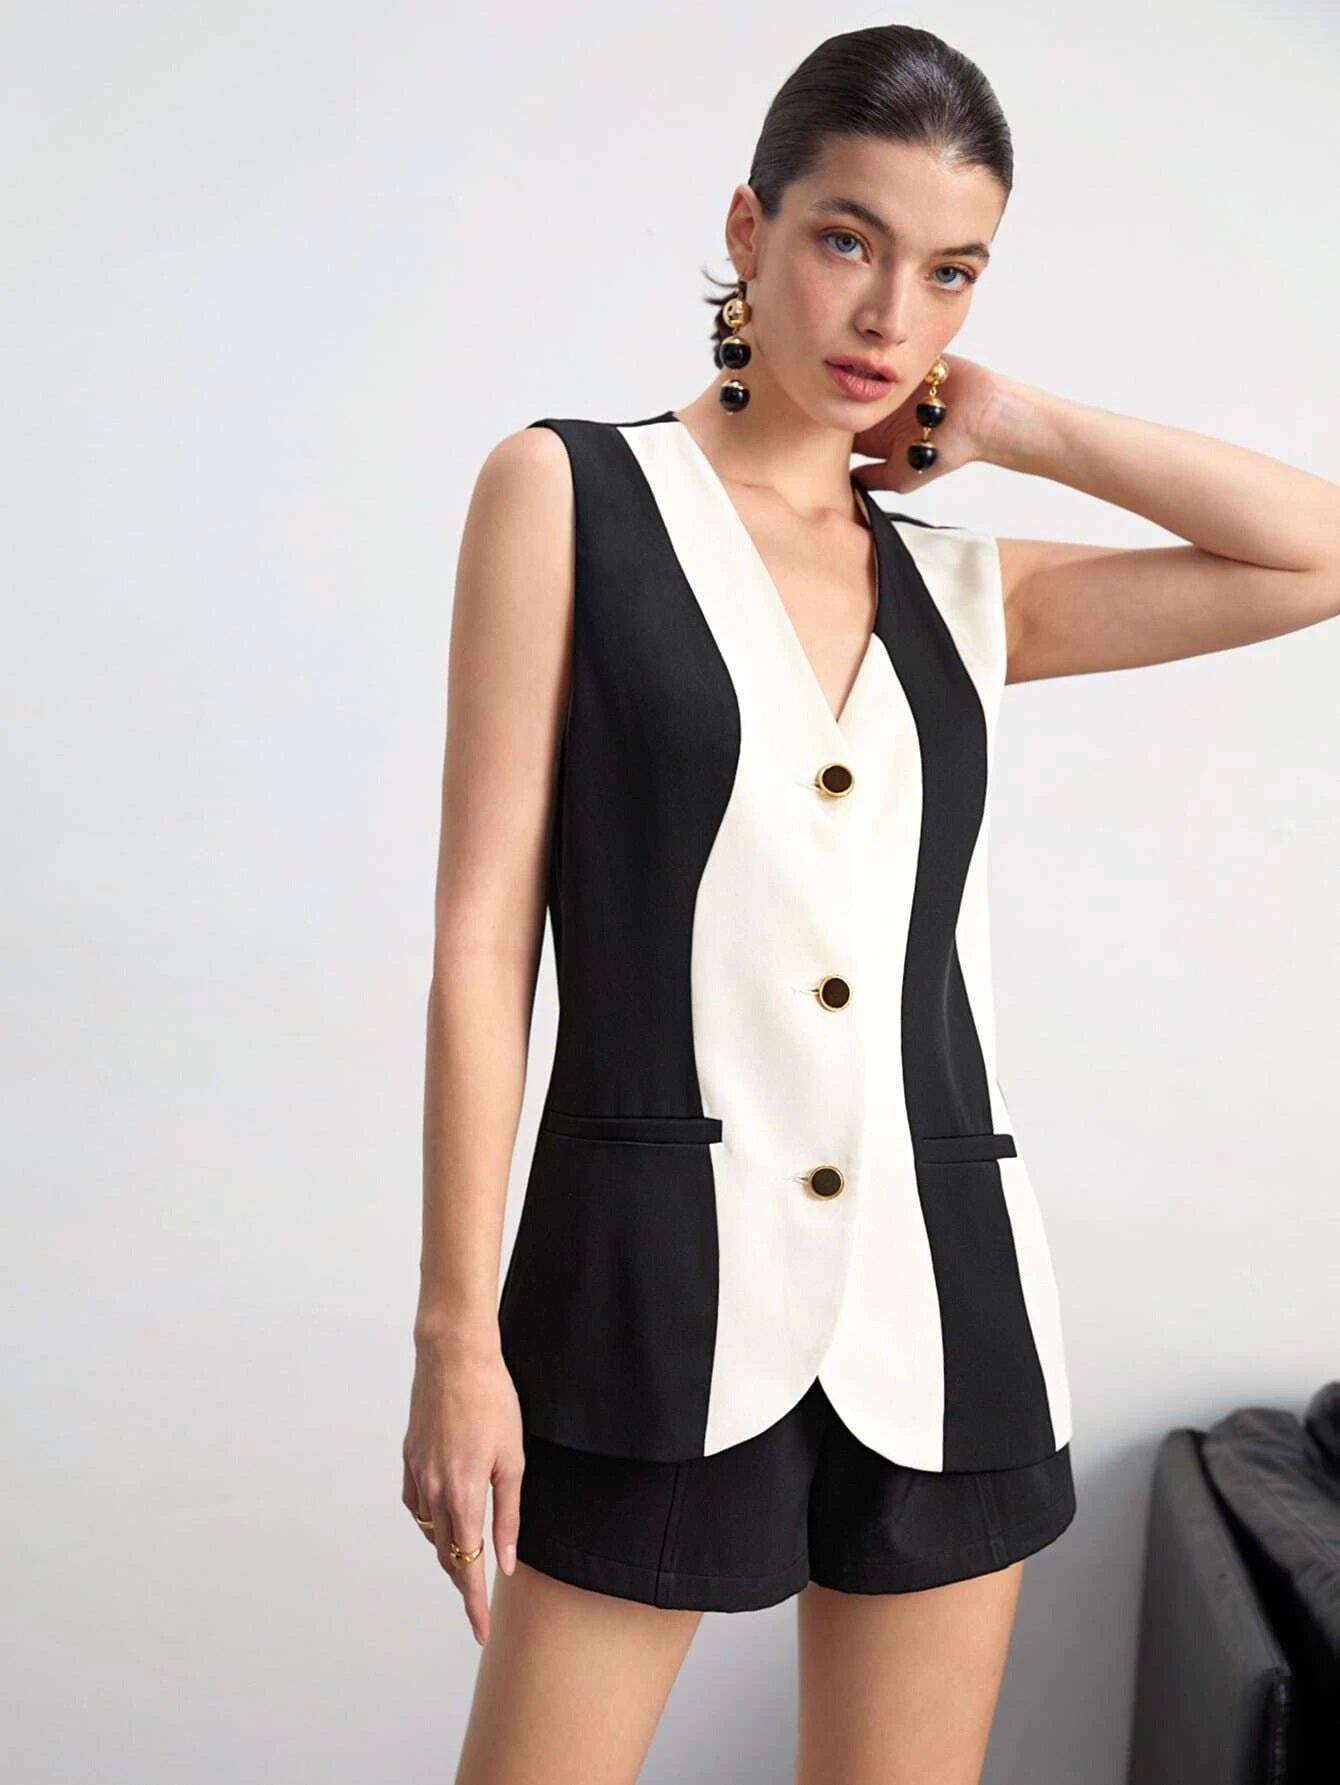 CM-CS834220 Women Elegant Seoul Style Two Tone Button Front Vest Blazer